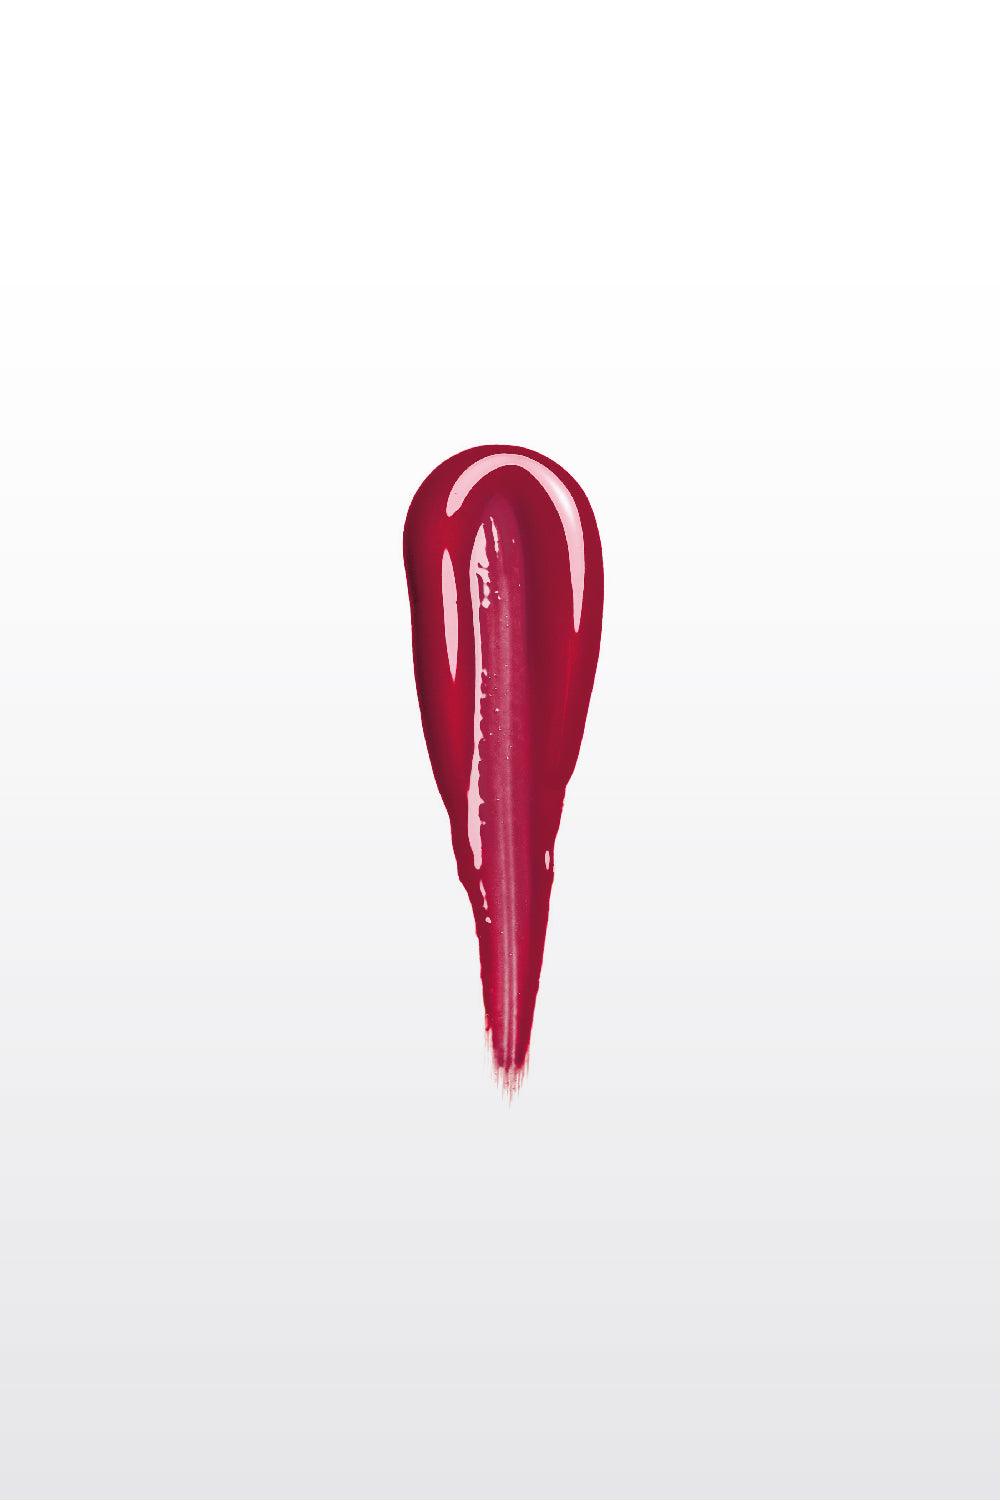 Elizabeth Arden - שפתון נוזלי BEAUTIFUL COLOR LIQUID LIP LACQUER FINISH - MASHBIR//365